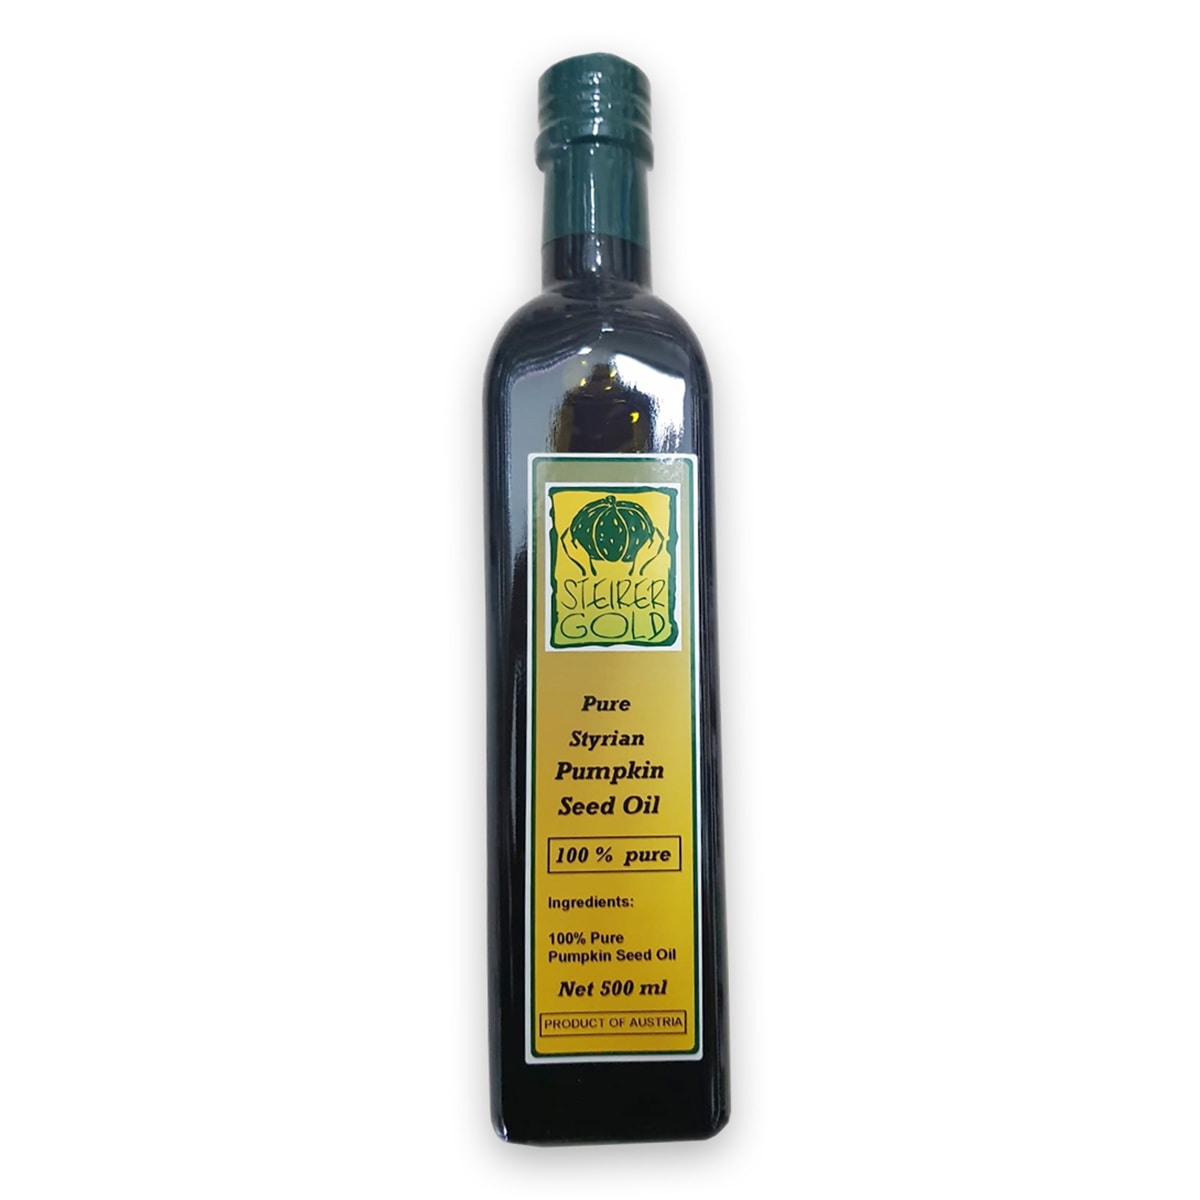 Buy Steirer Gold Pure Styrian Pumpkin Seed Oil - 500 ml